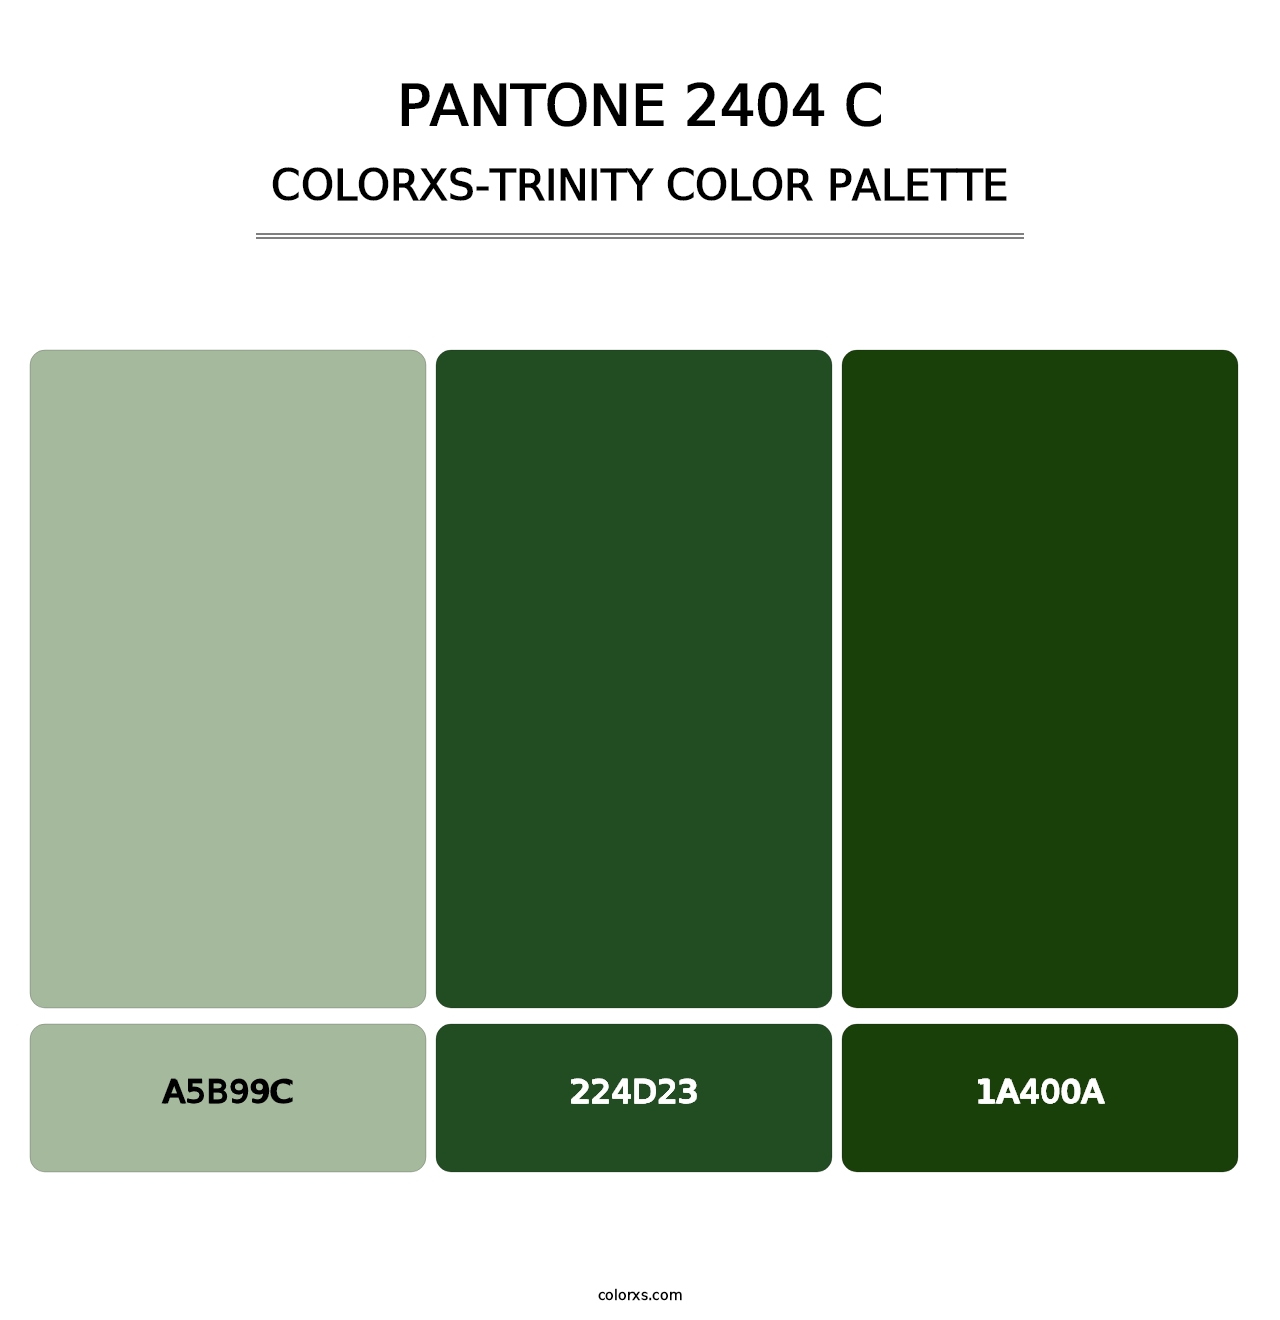 PANTONE 2404 C - Colorxs Trinity Palette